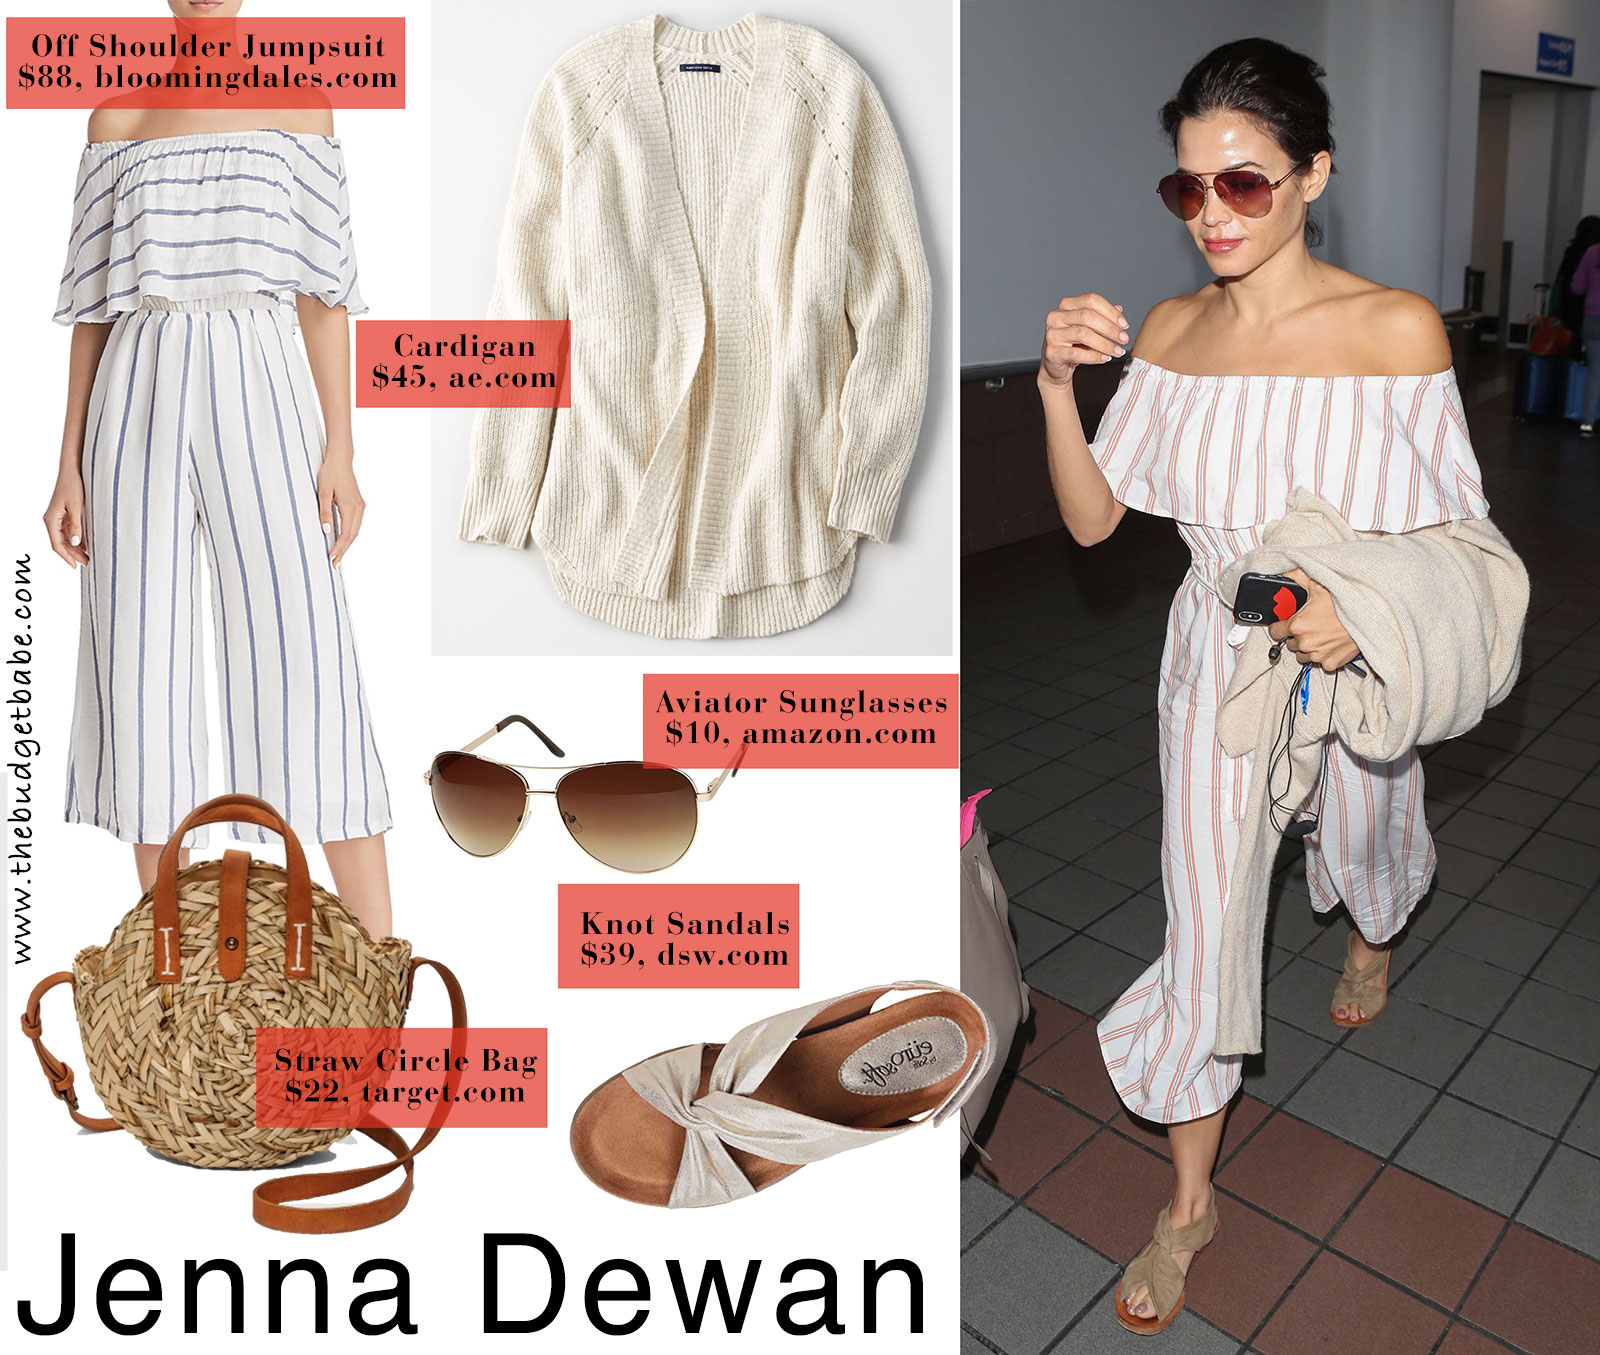 Jenna Dewan wears an off-the-shoulder jumpsuit by Cotton On